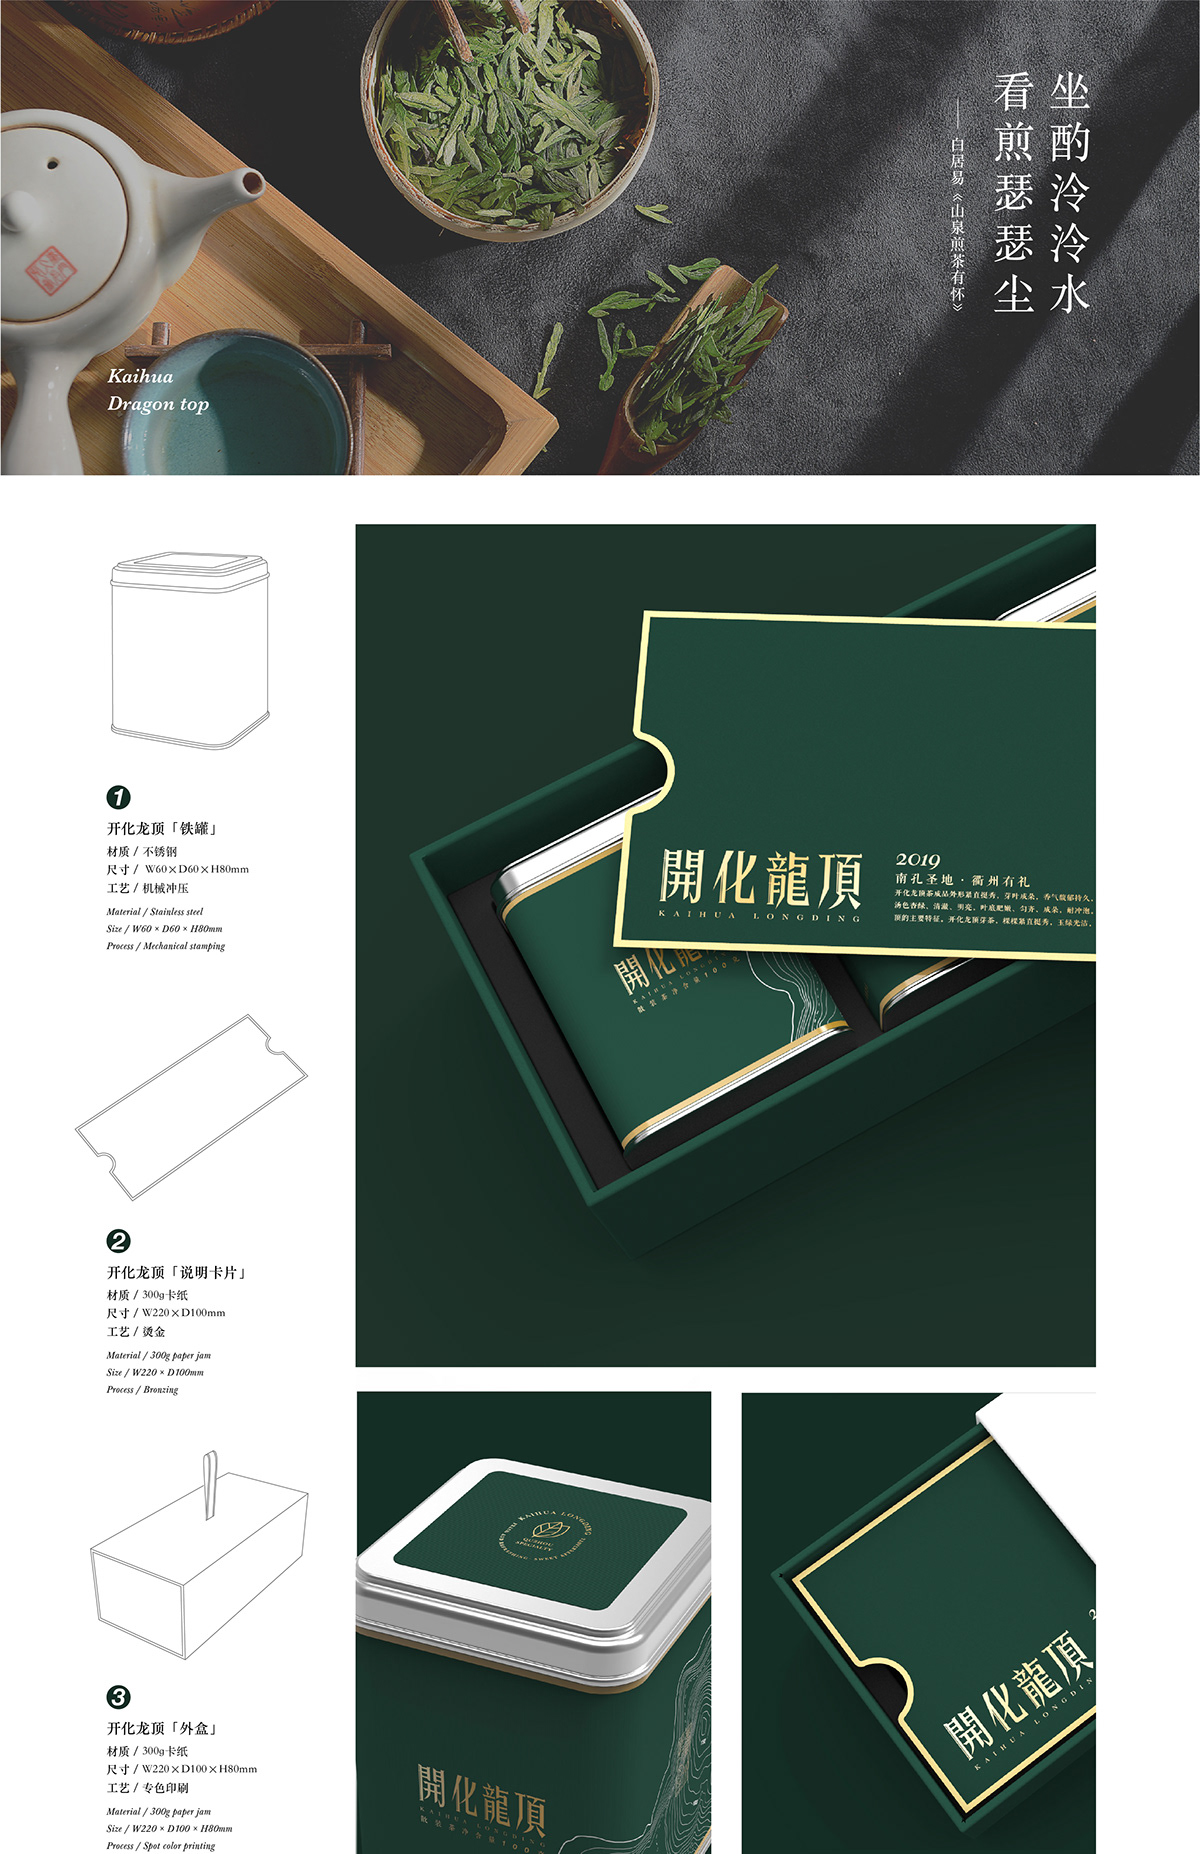 Brand Design curtural innovation Food Packaging graphic design  package design  product design  Render